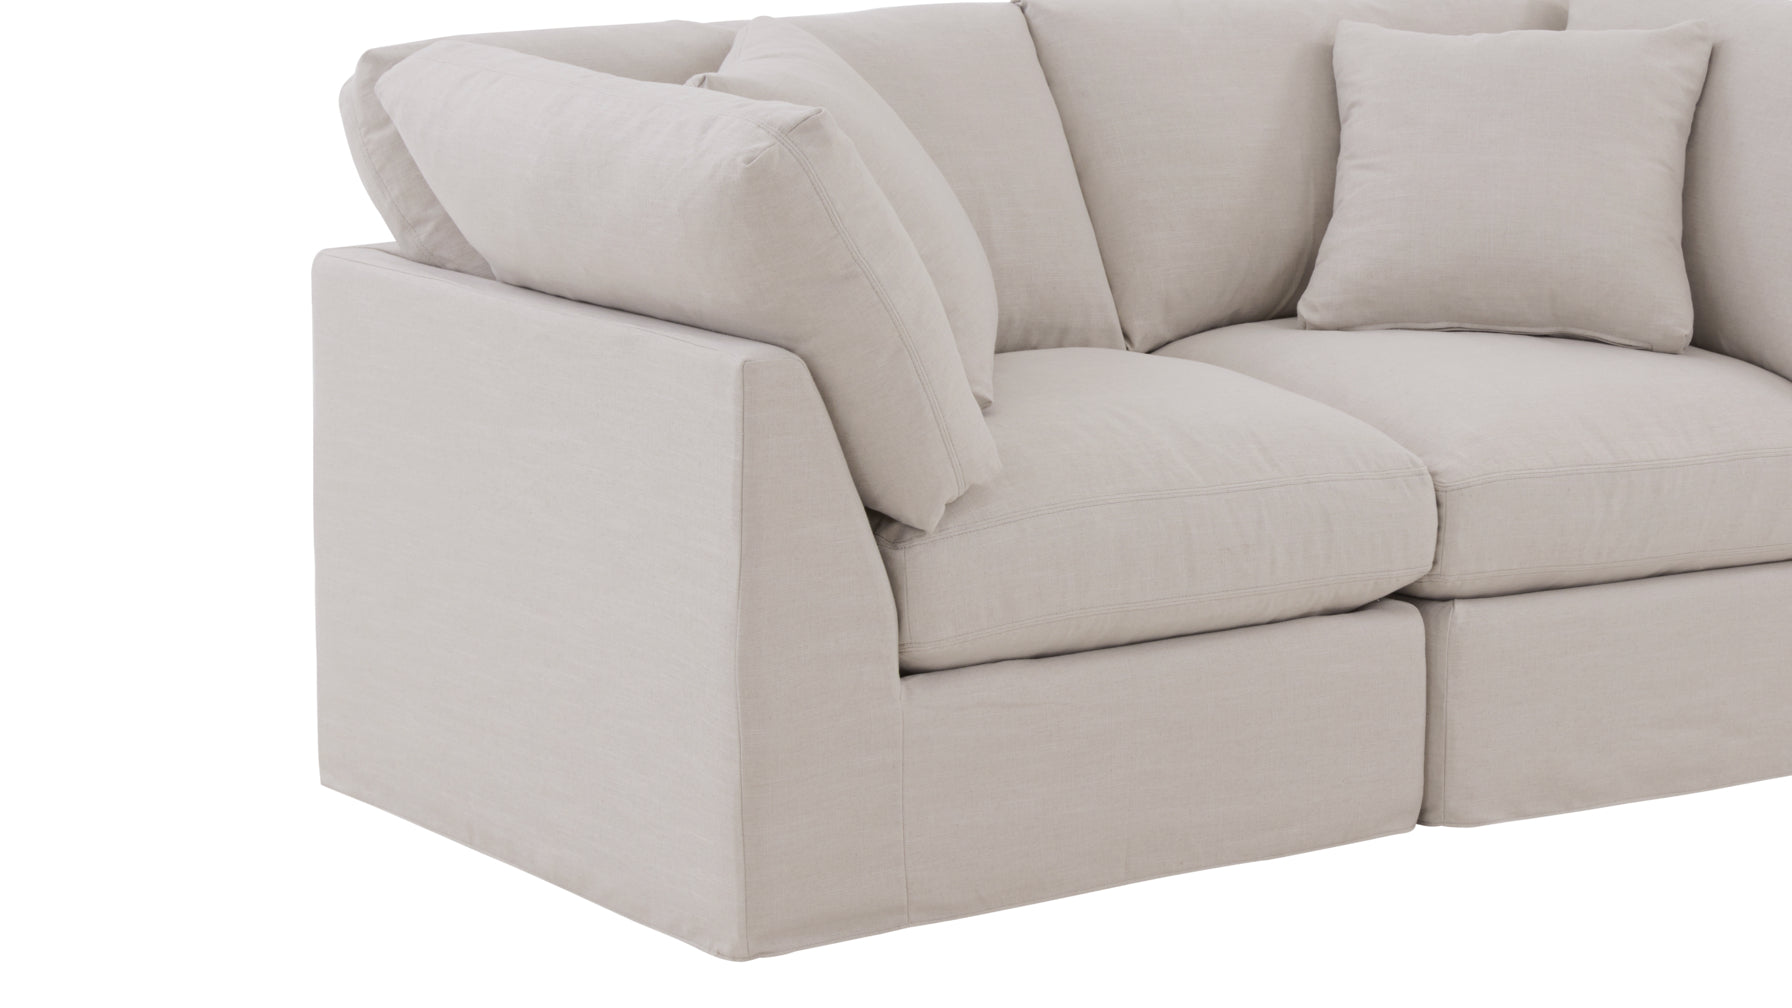 Get Together™ 2-Piece Modular Sofa, Standard, Clay - Image 8